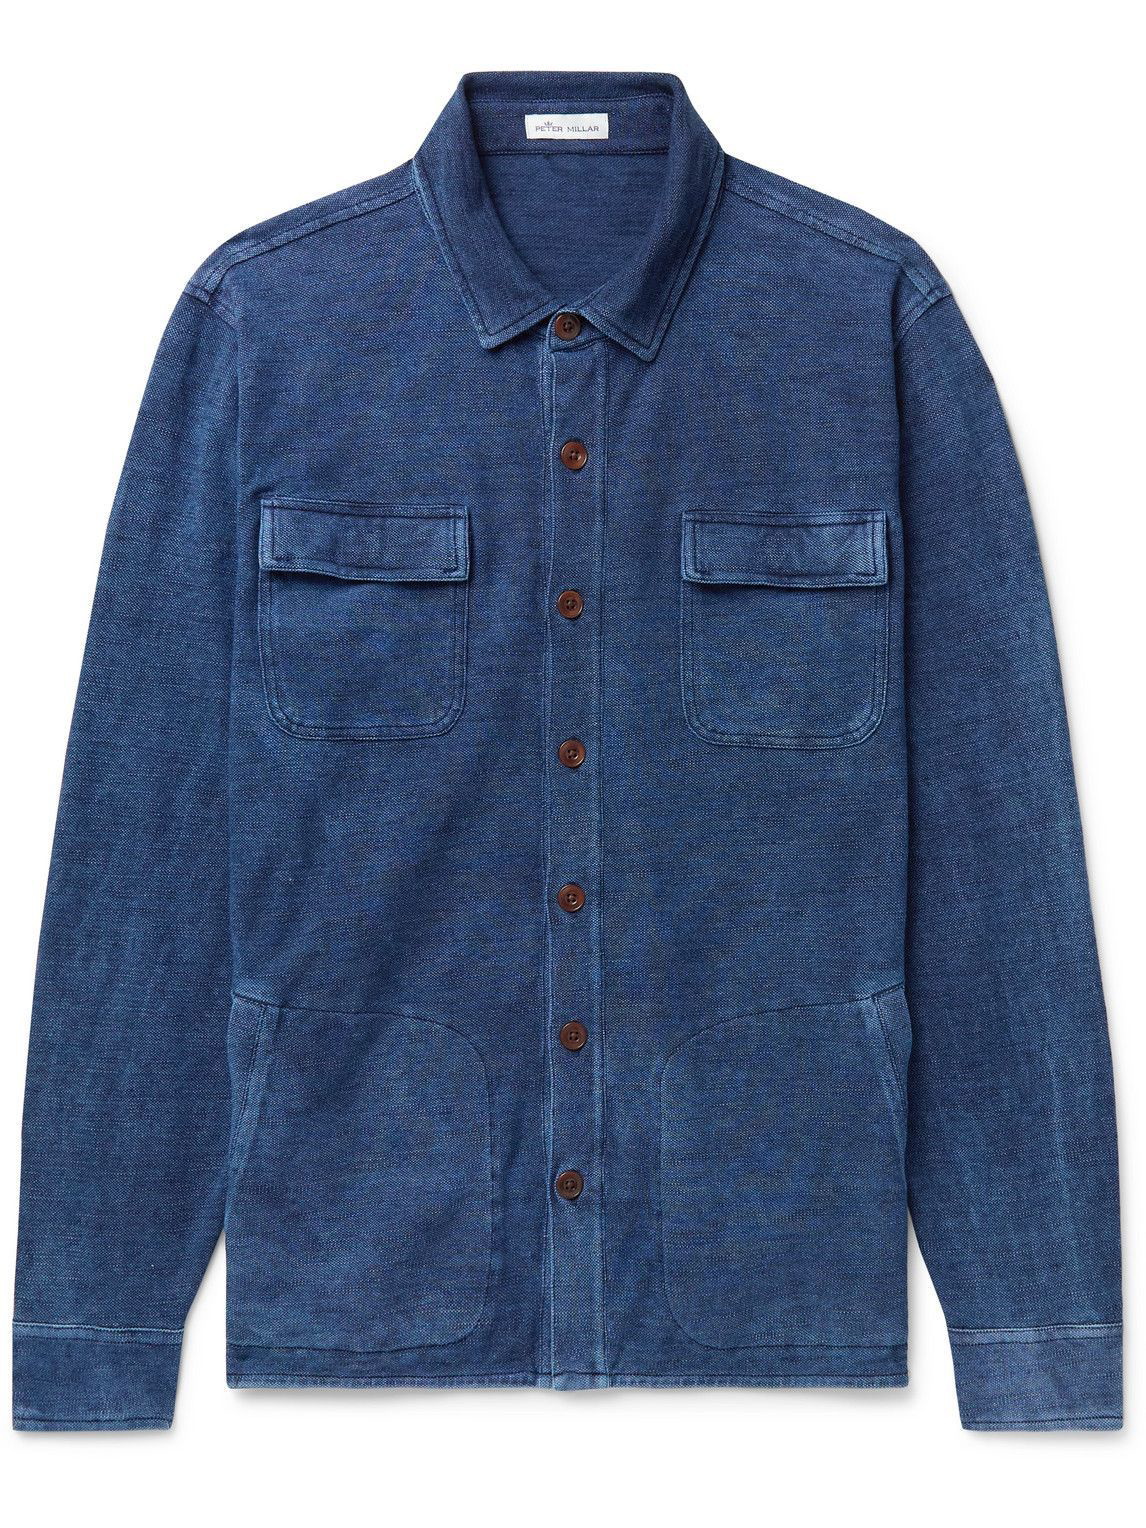 Peter Millar - Indigo-Dyed Cotton Shirt Jacket - Blue Peter Millar